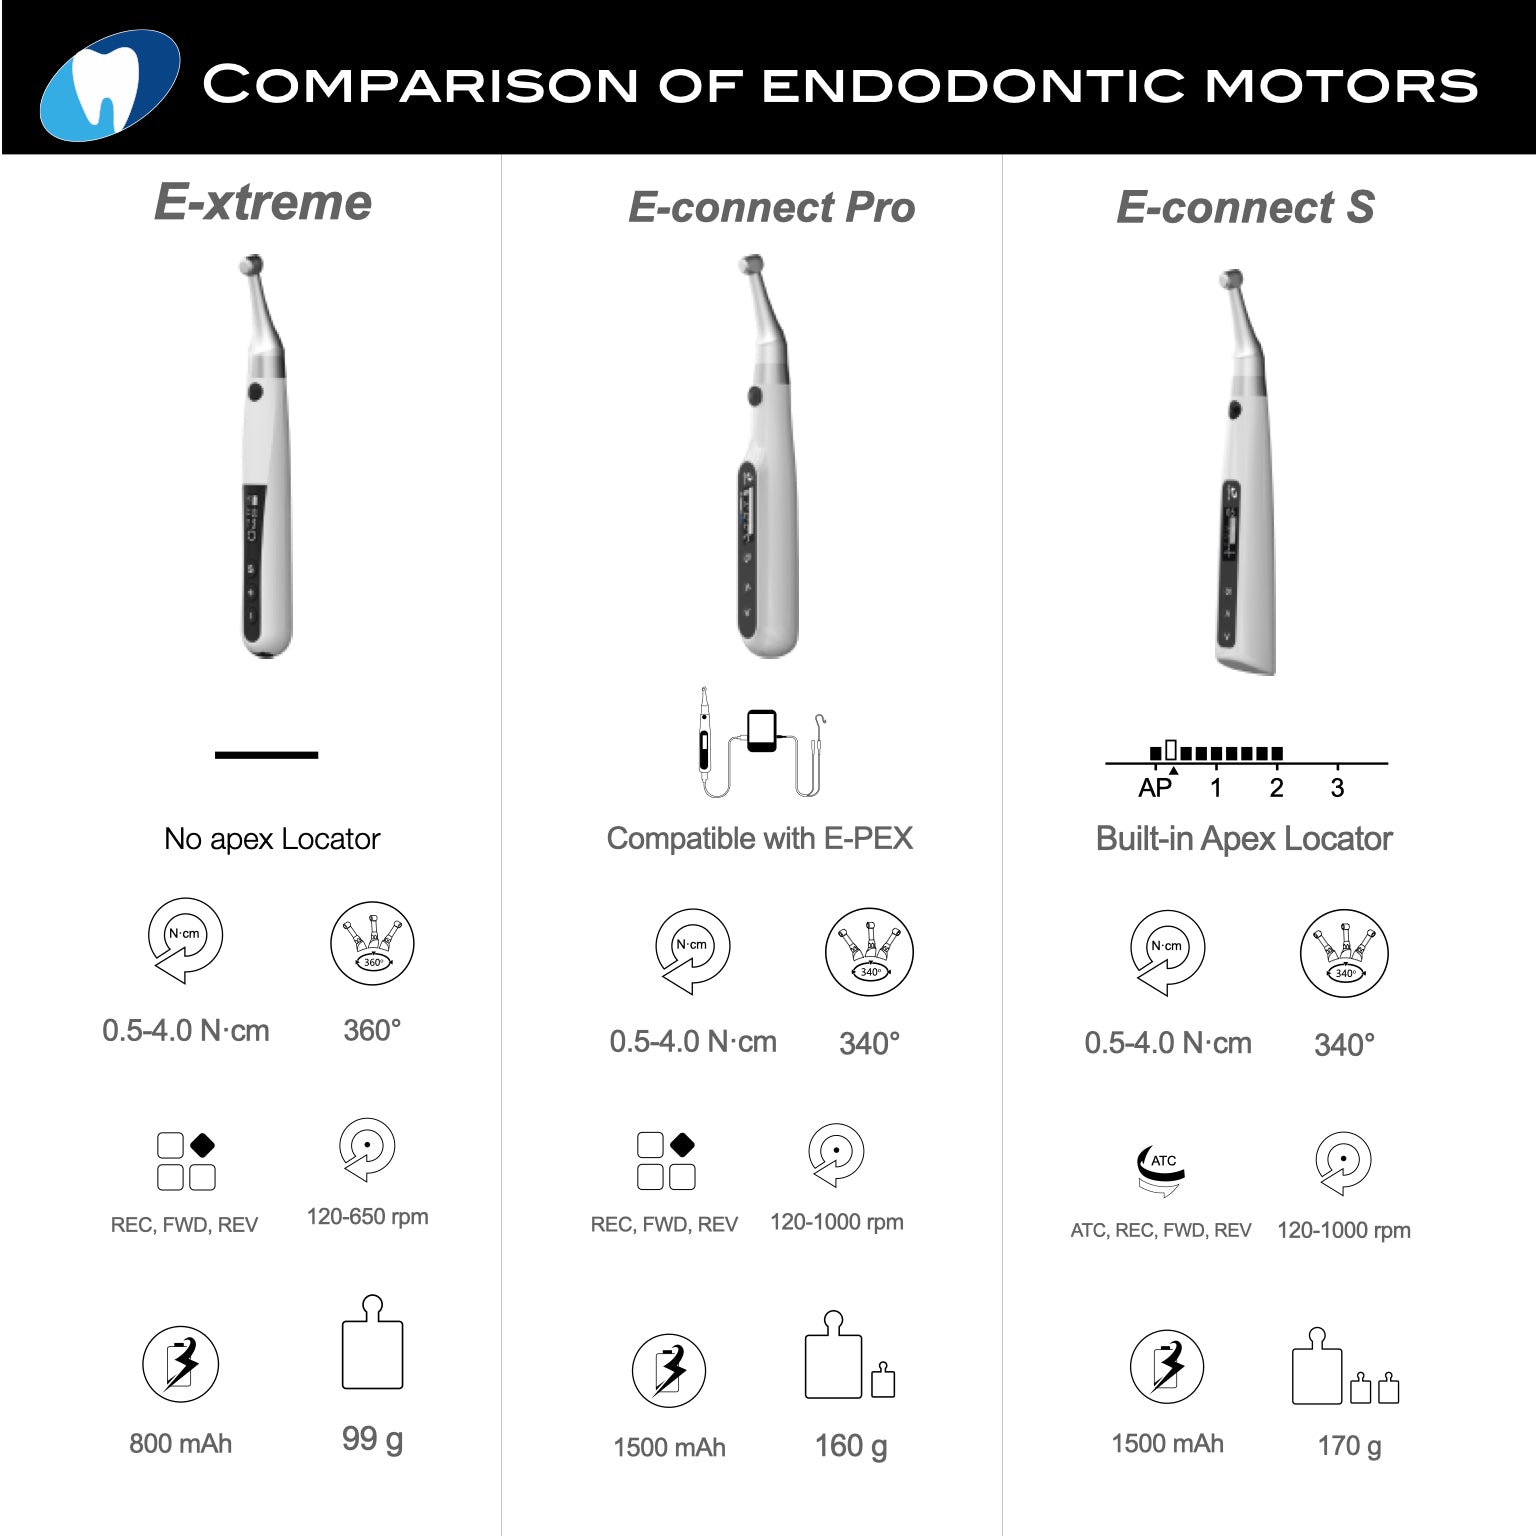 E-xtreme endodontic motor - Incidental